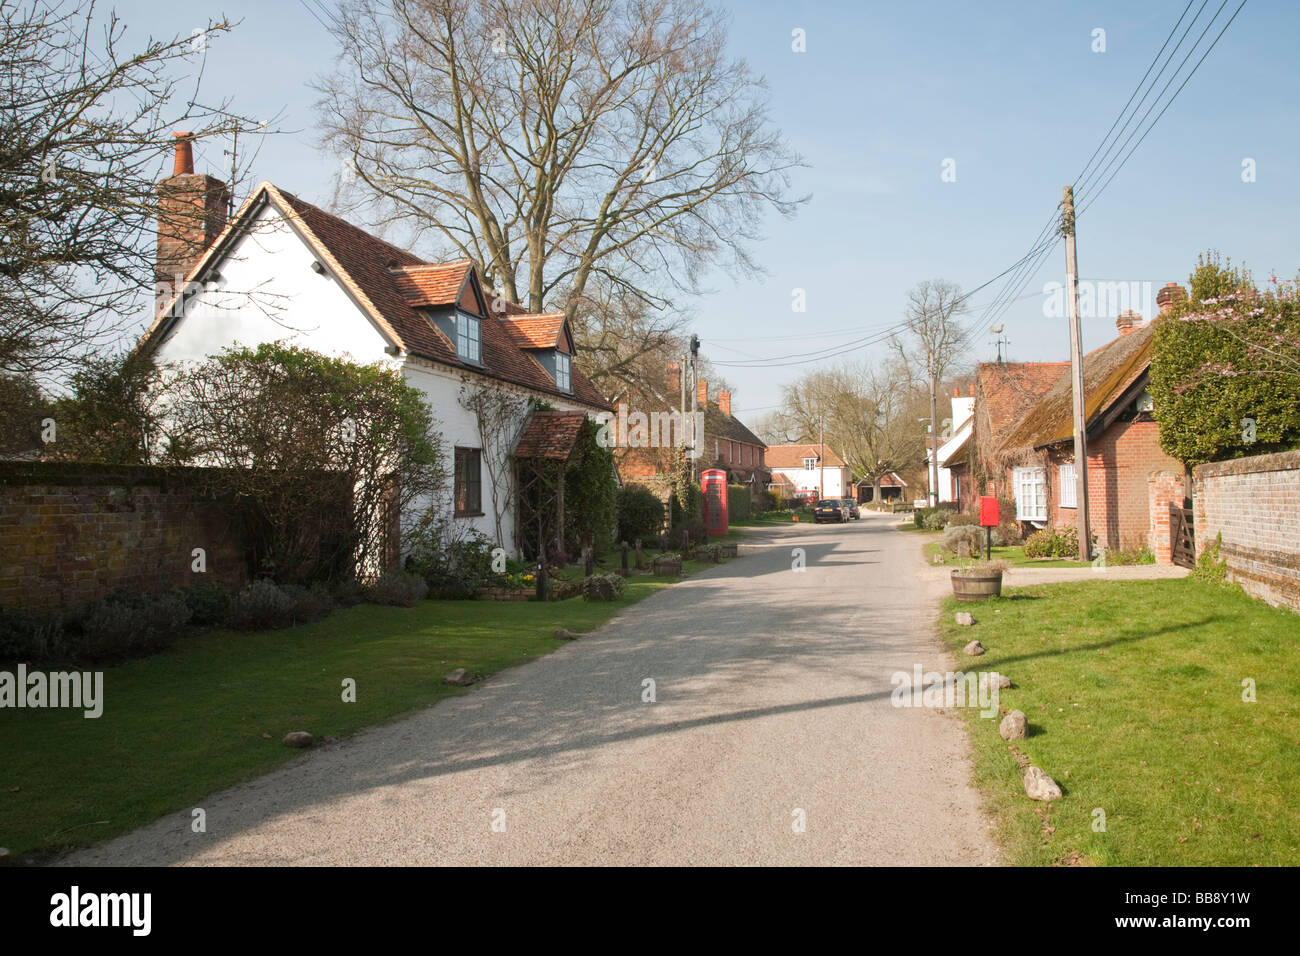 Village of North Stoke in Oxfordshire UK Stock Photo